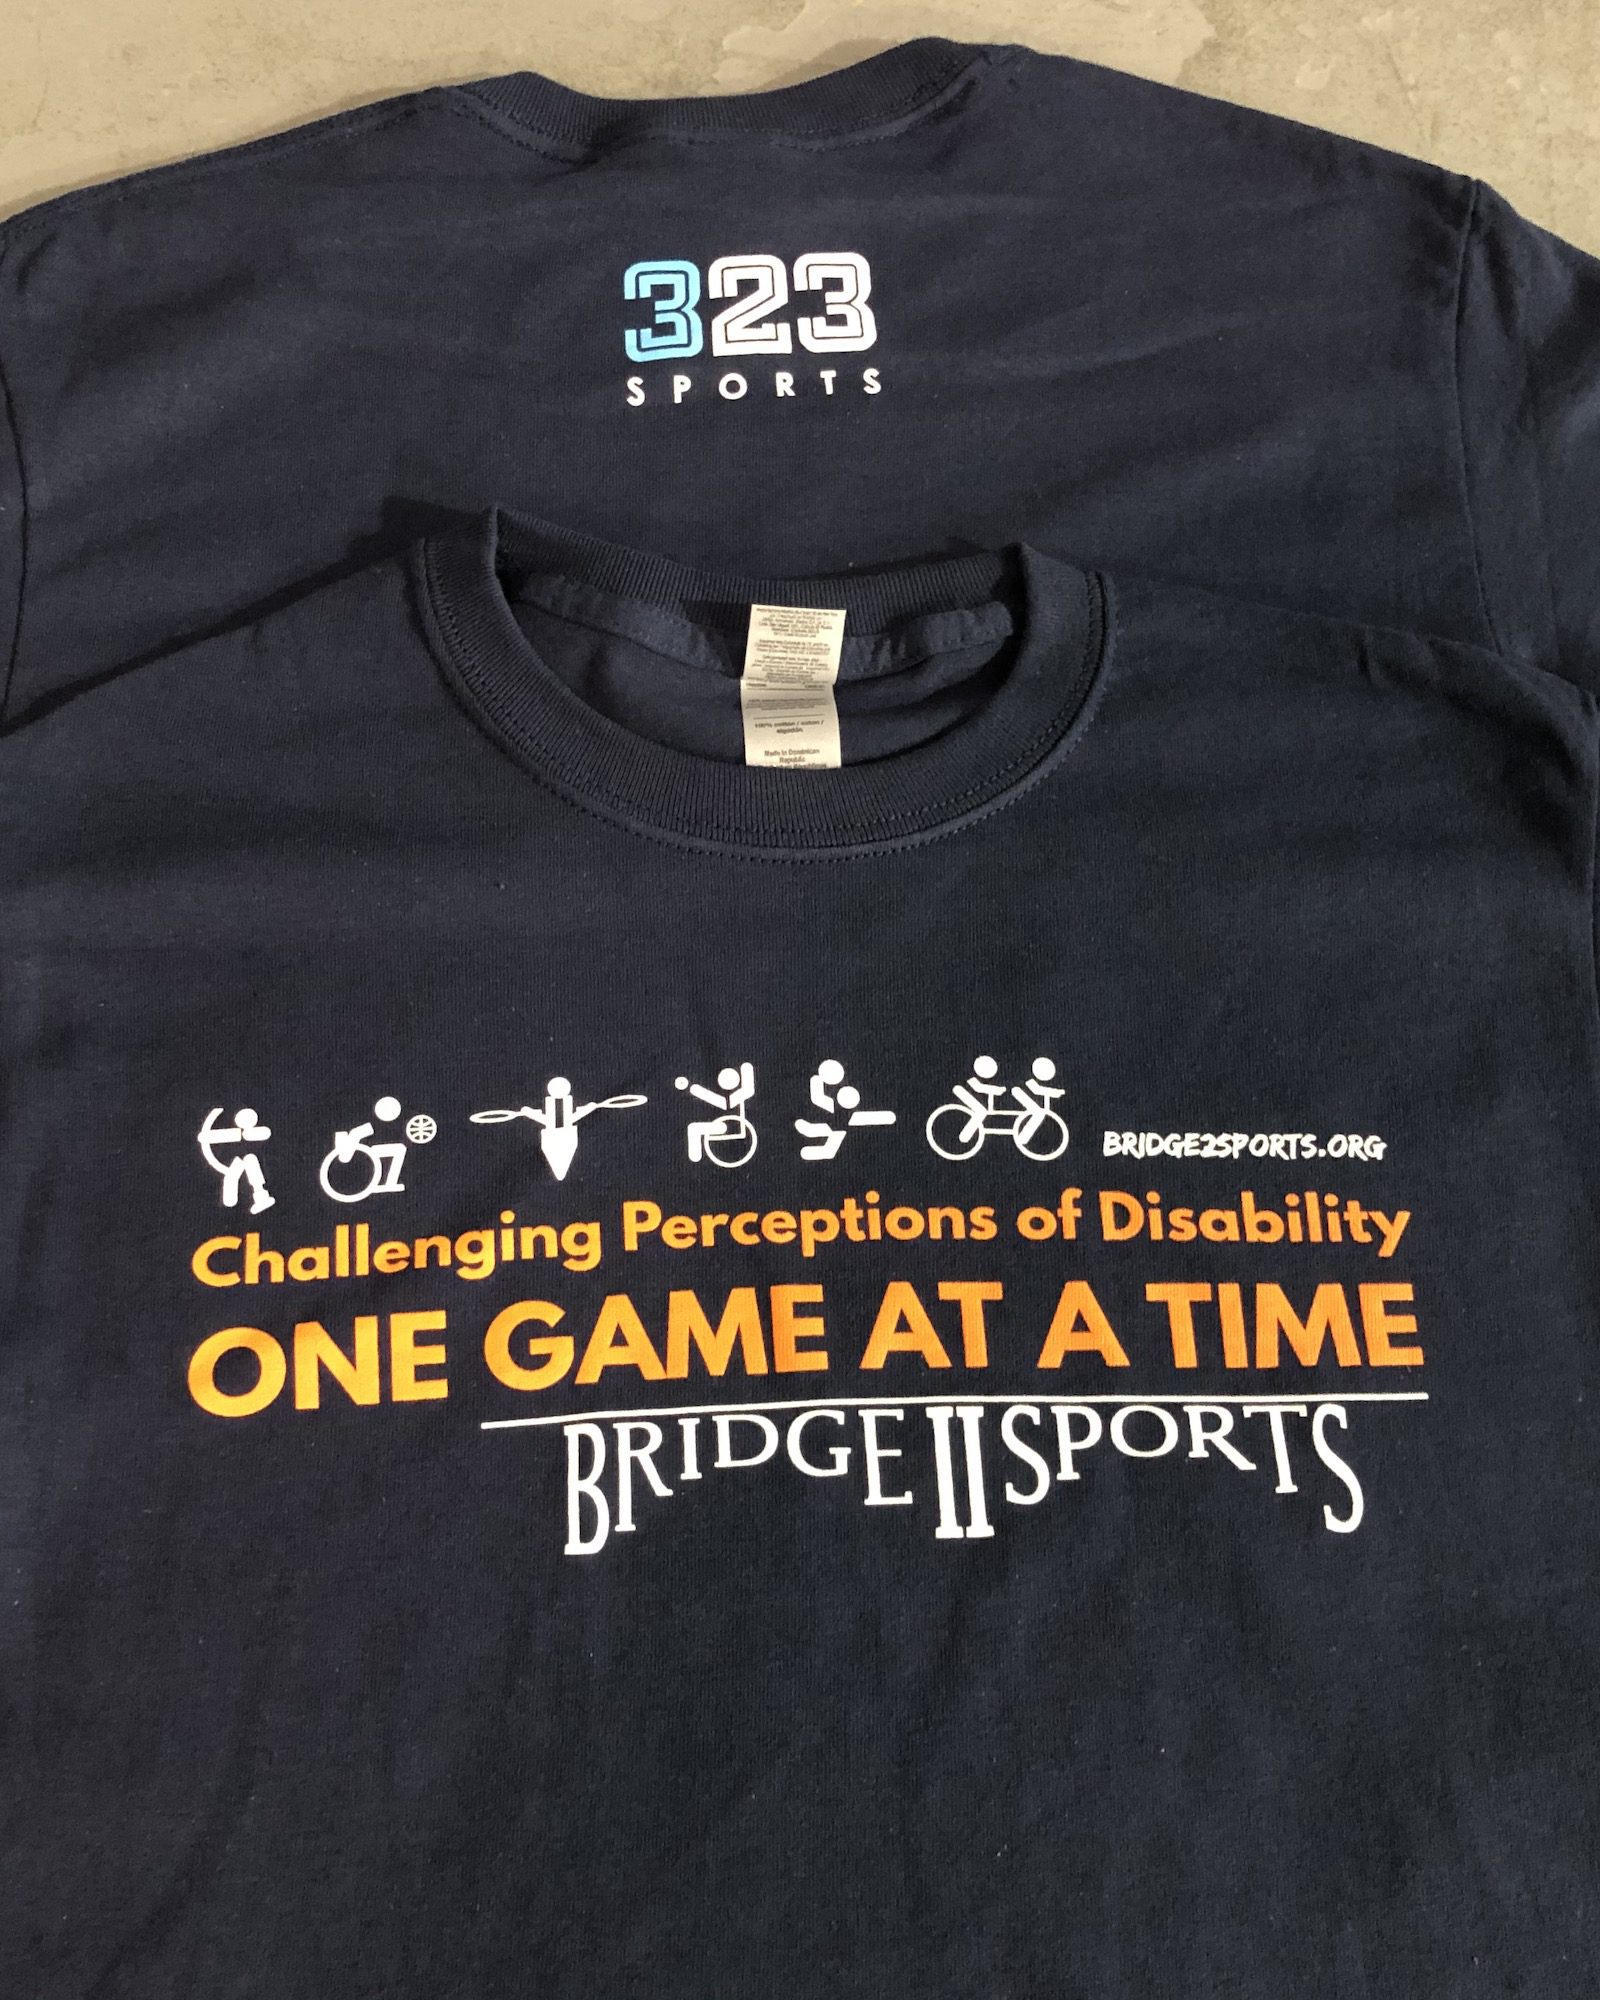 Bridge 2 sports - Fundraising Shirts